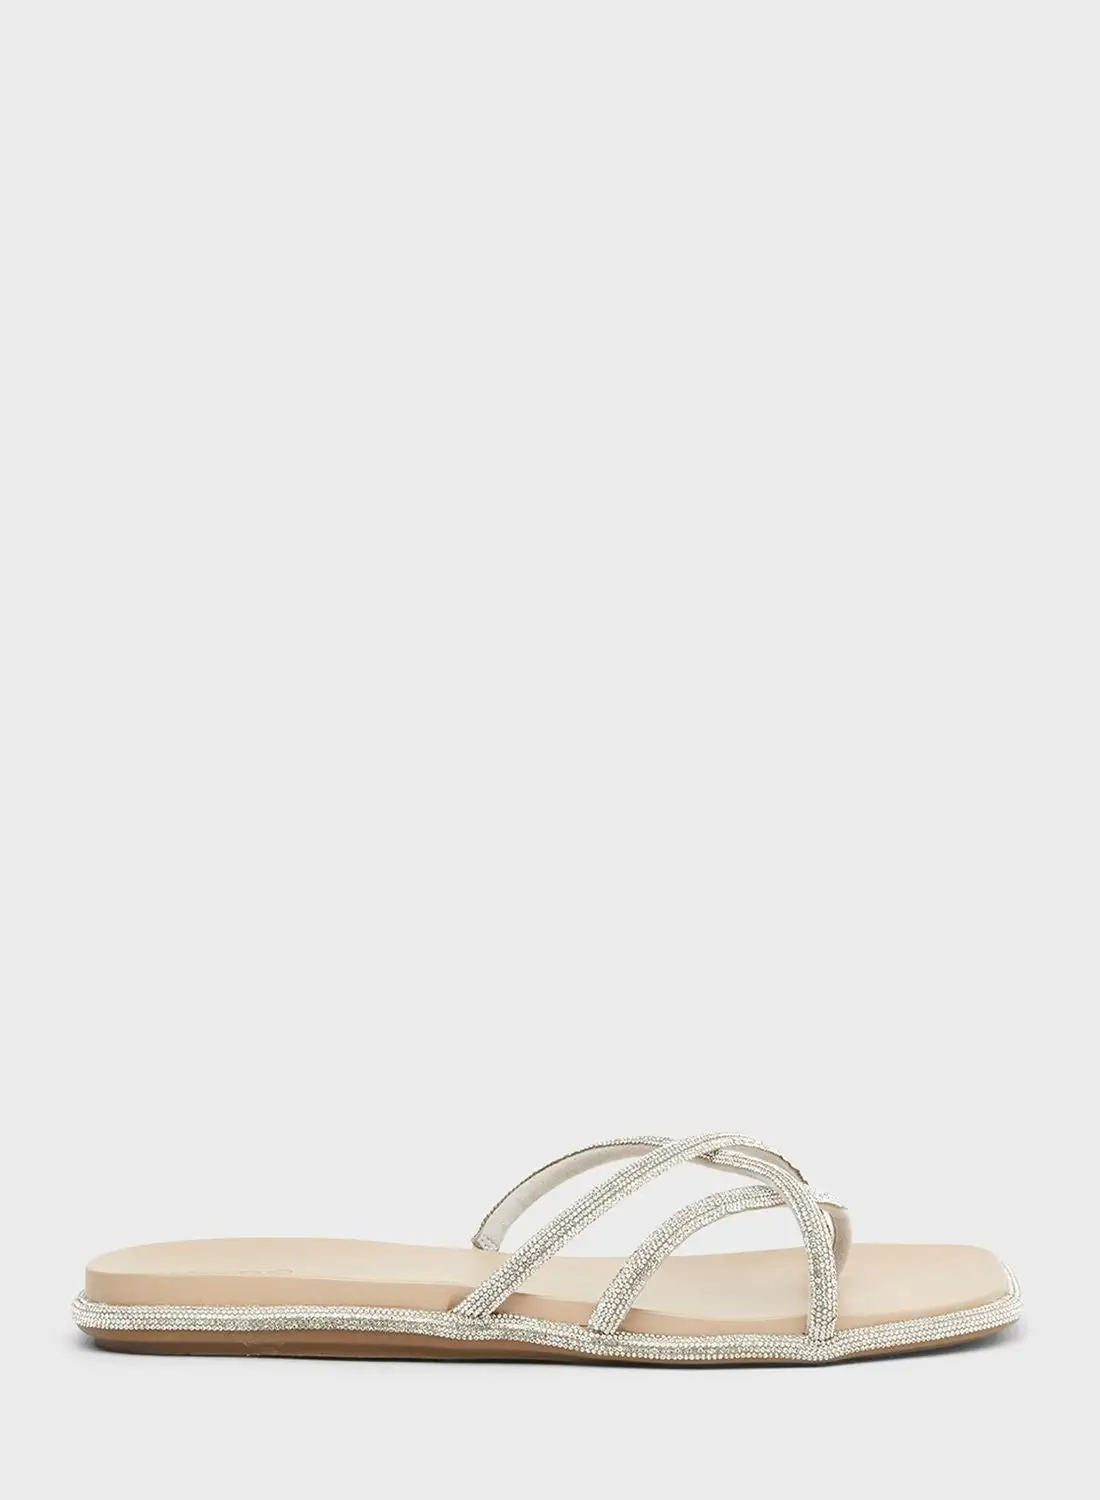 ALDO Aseago Flat Sandals